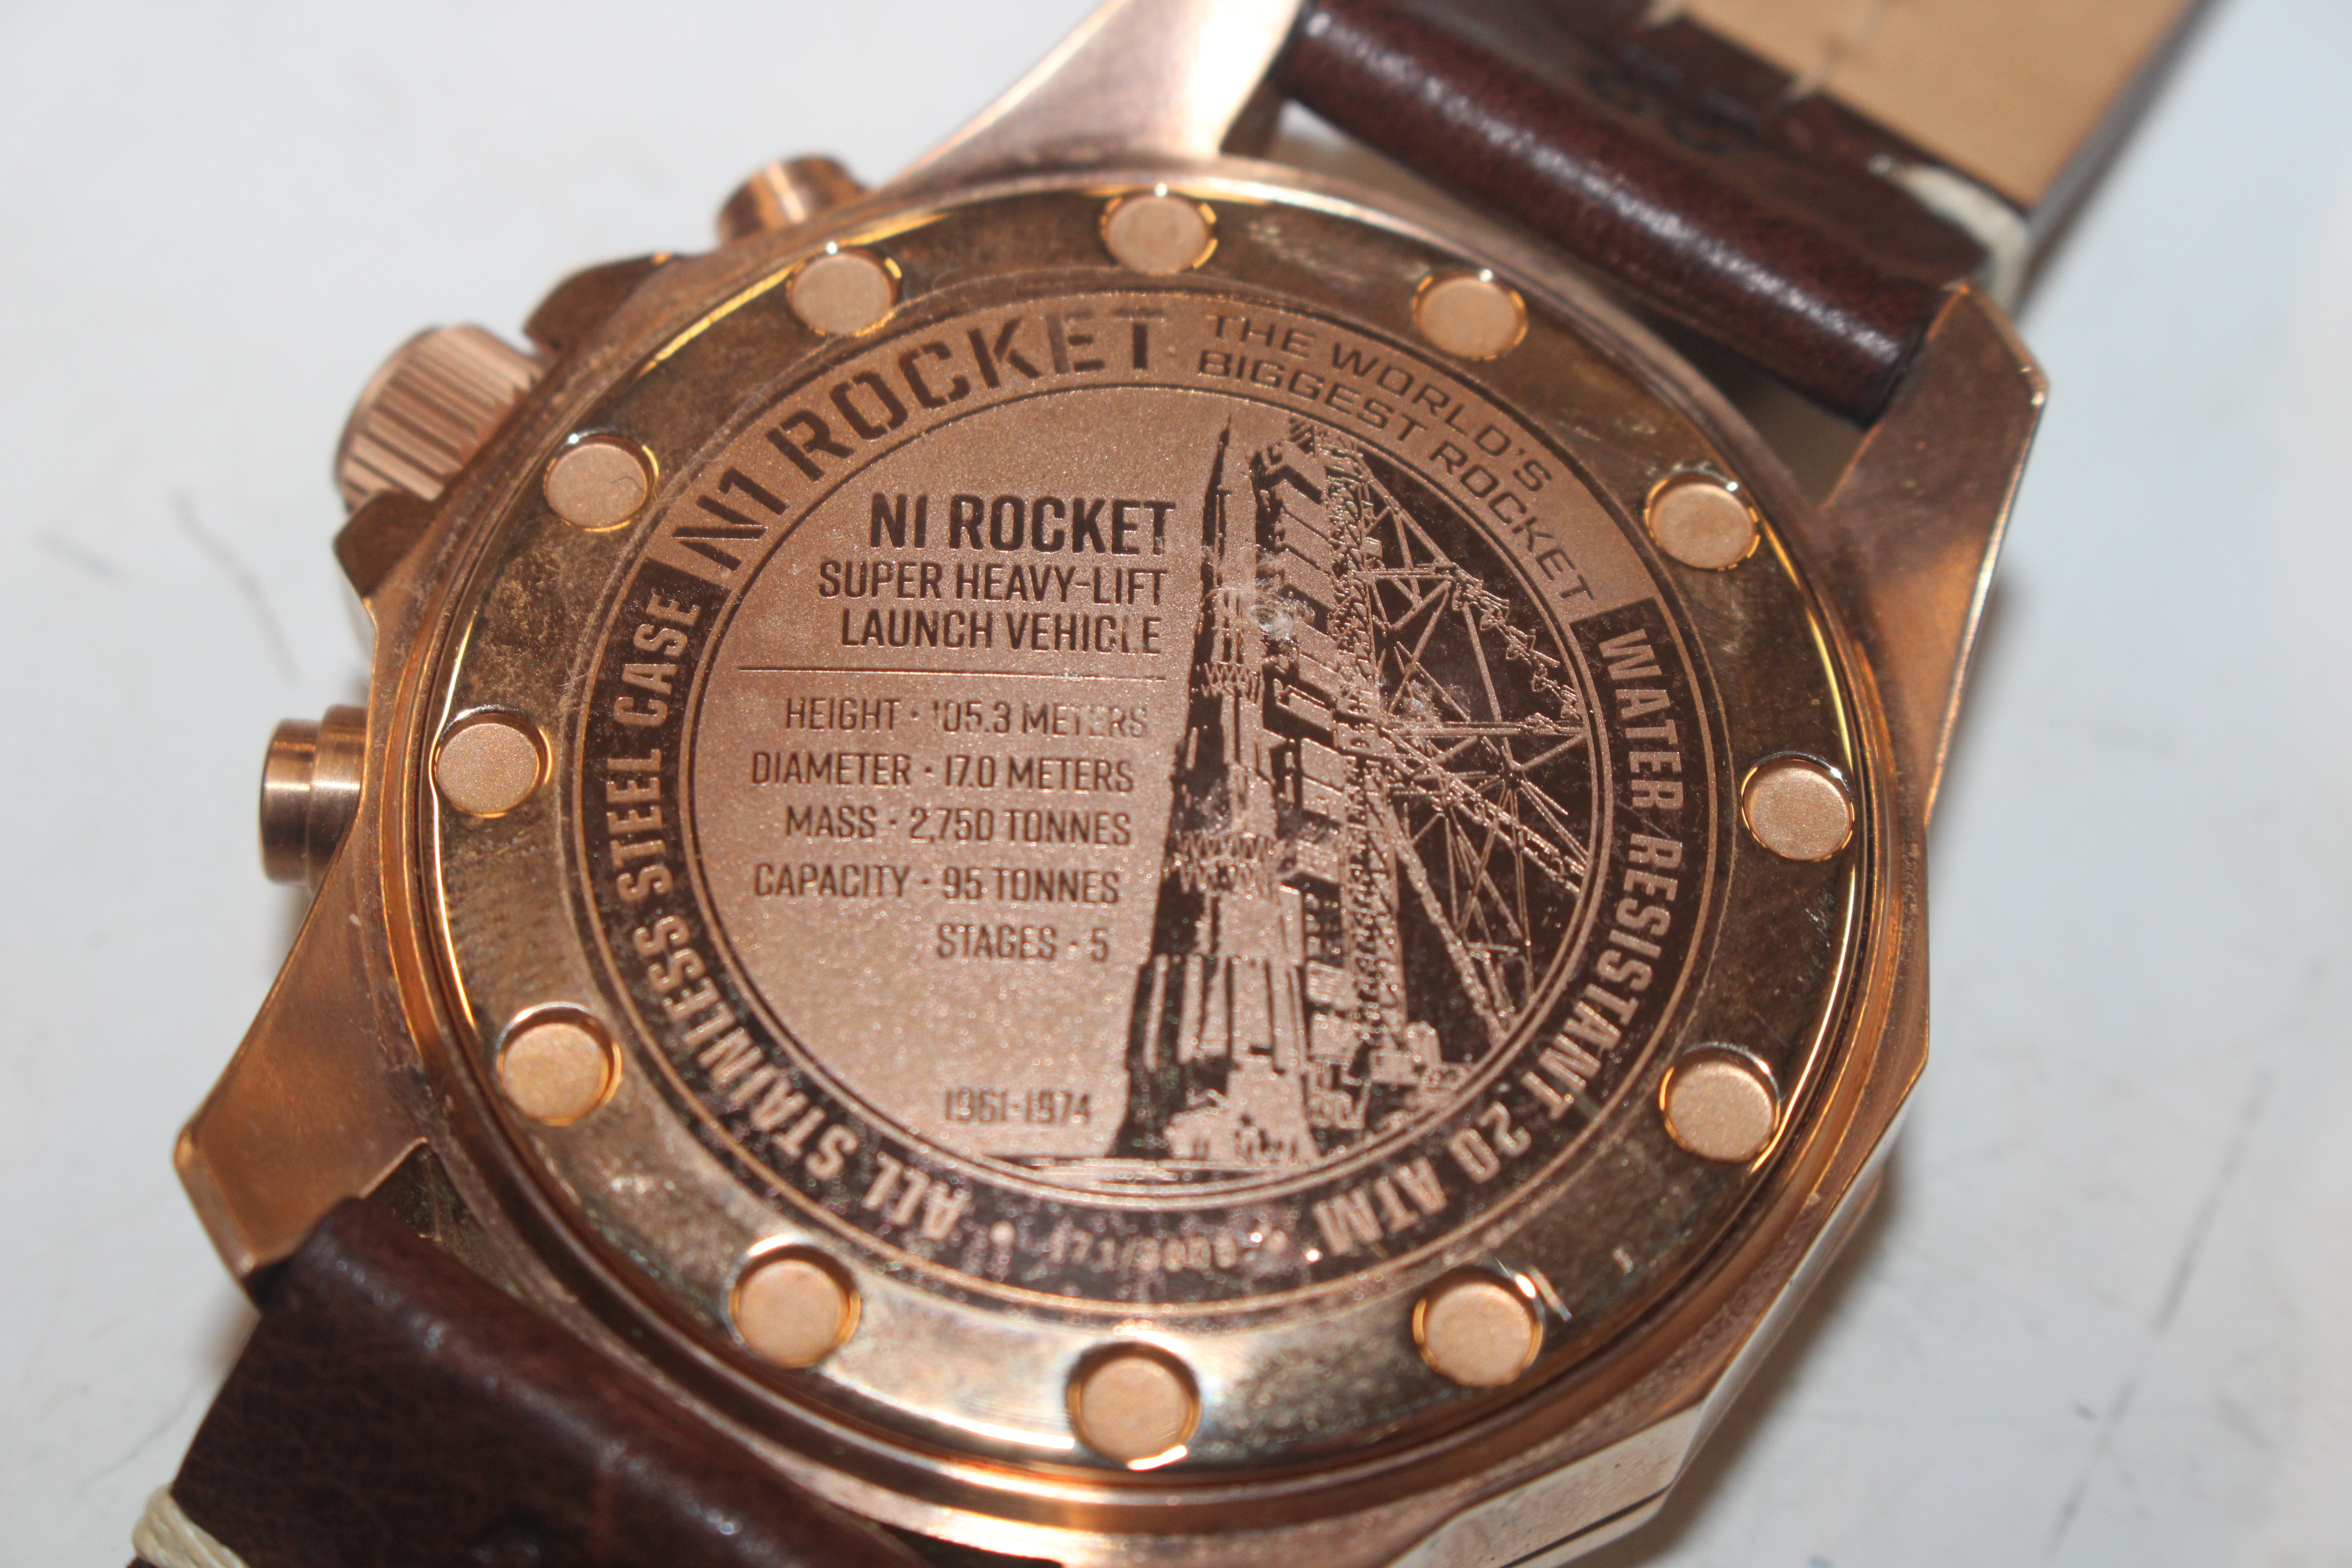 A Vostok Europe N1 Rocket wrist watch relating to - Image 5 of 7